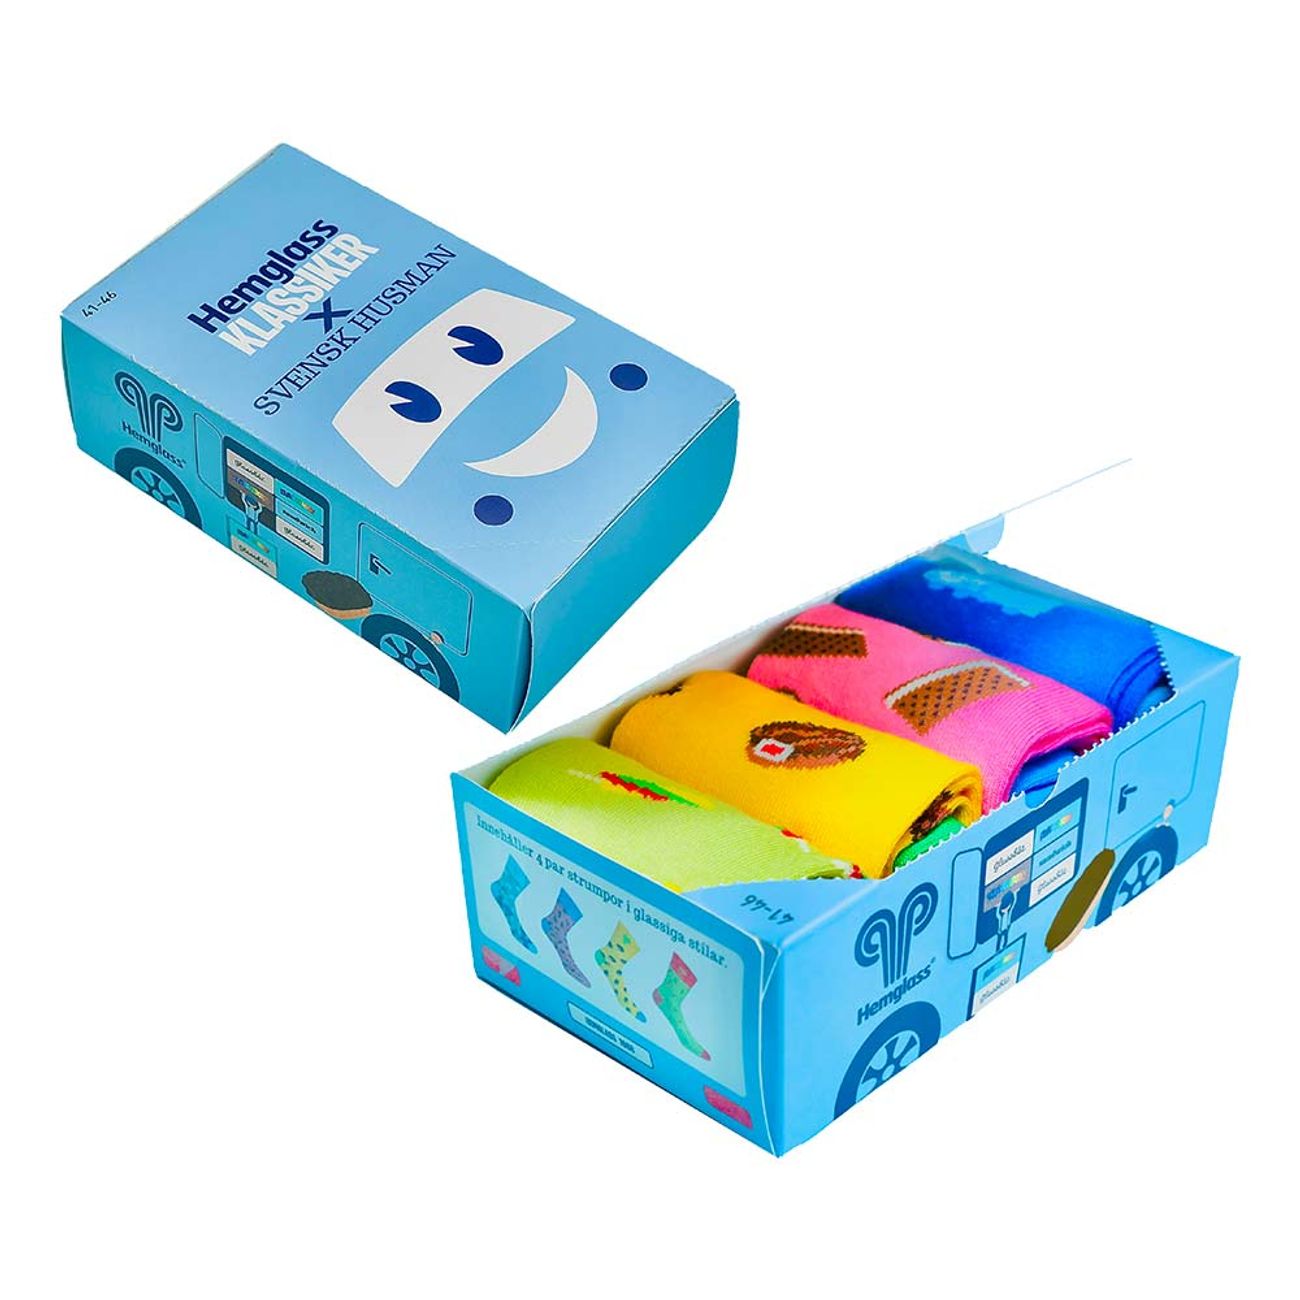 fika-socks-presentbox-hemglass-92698-1